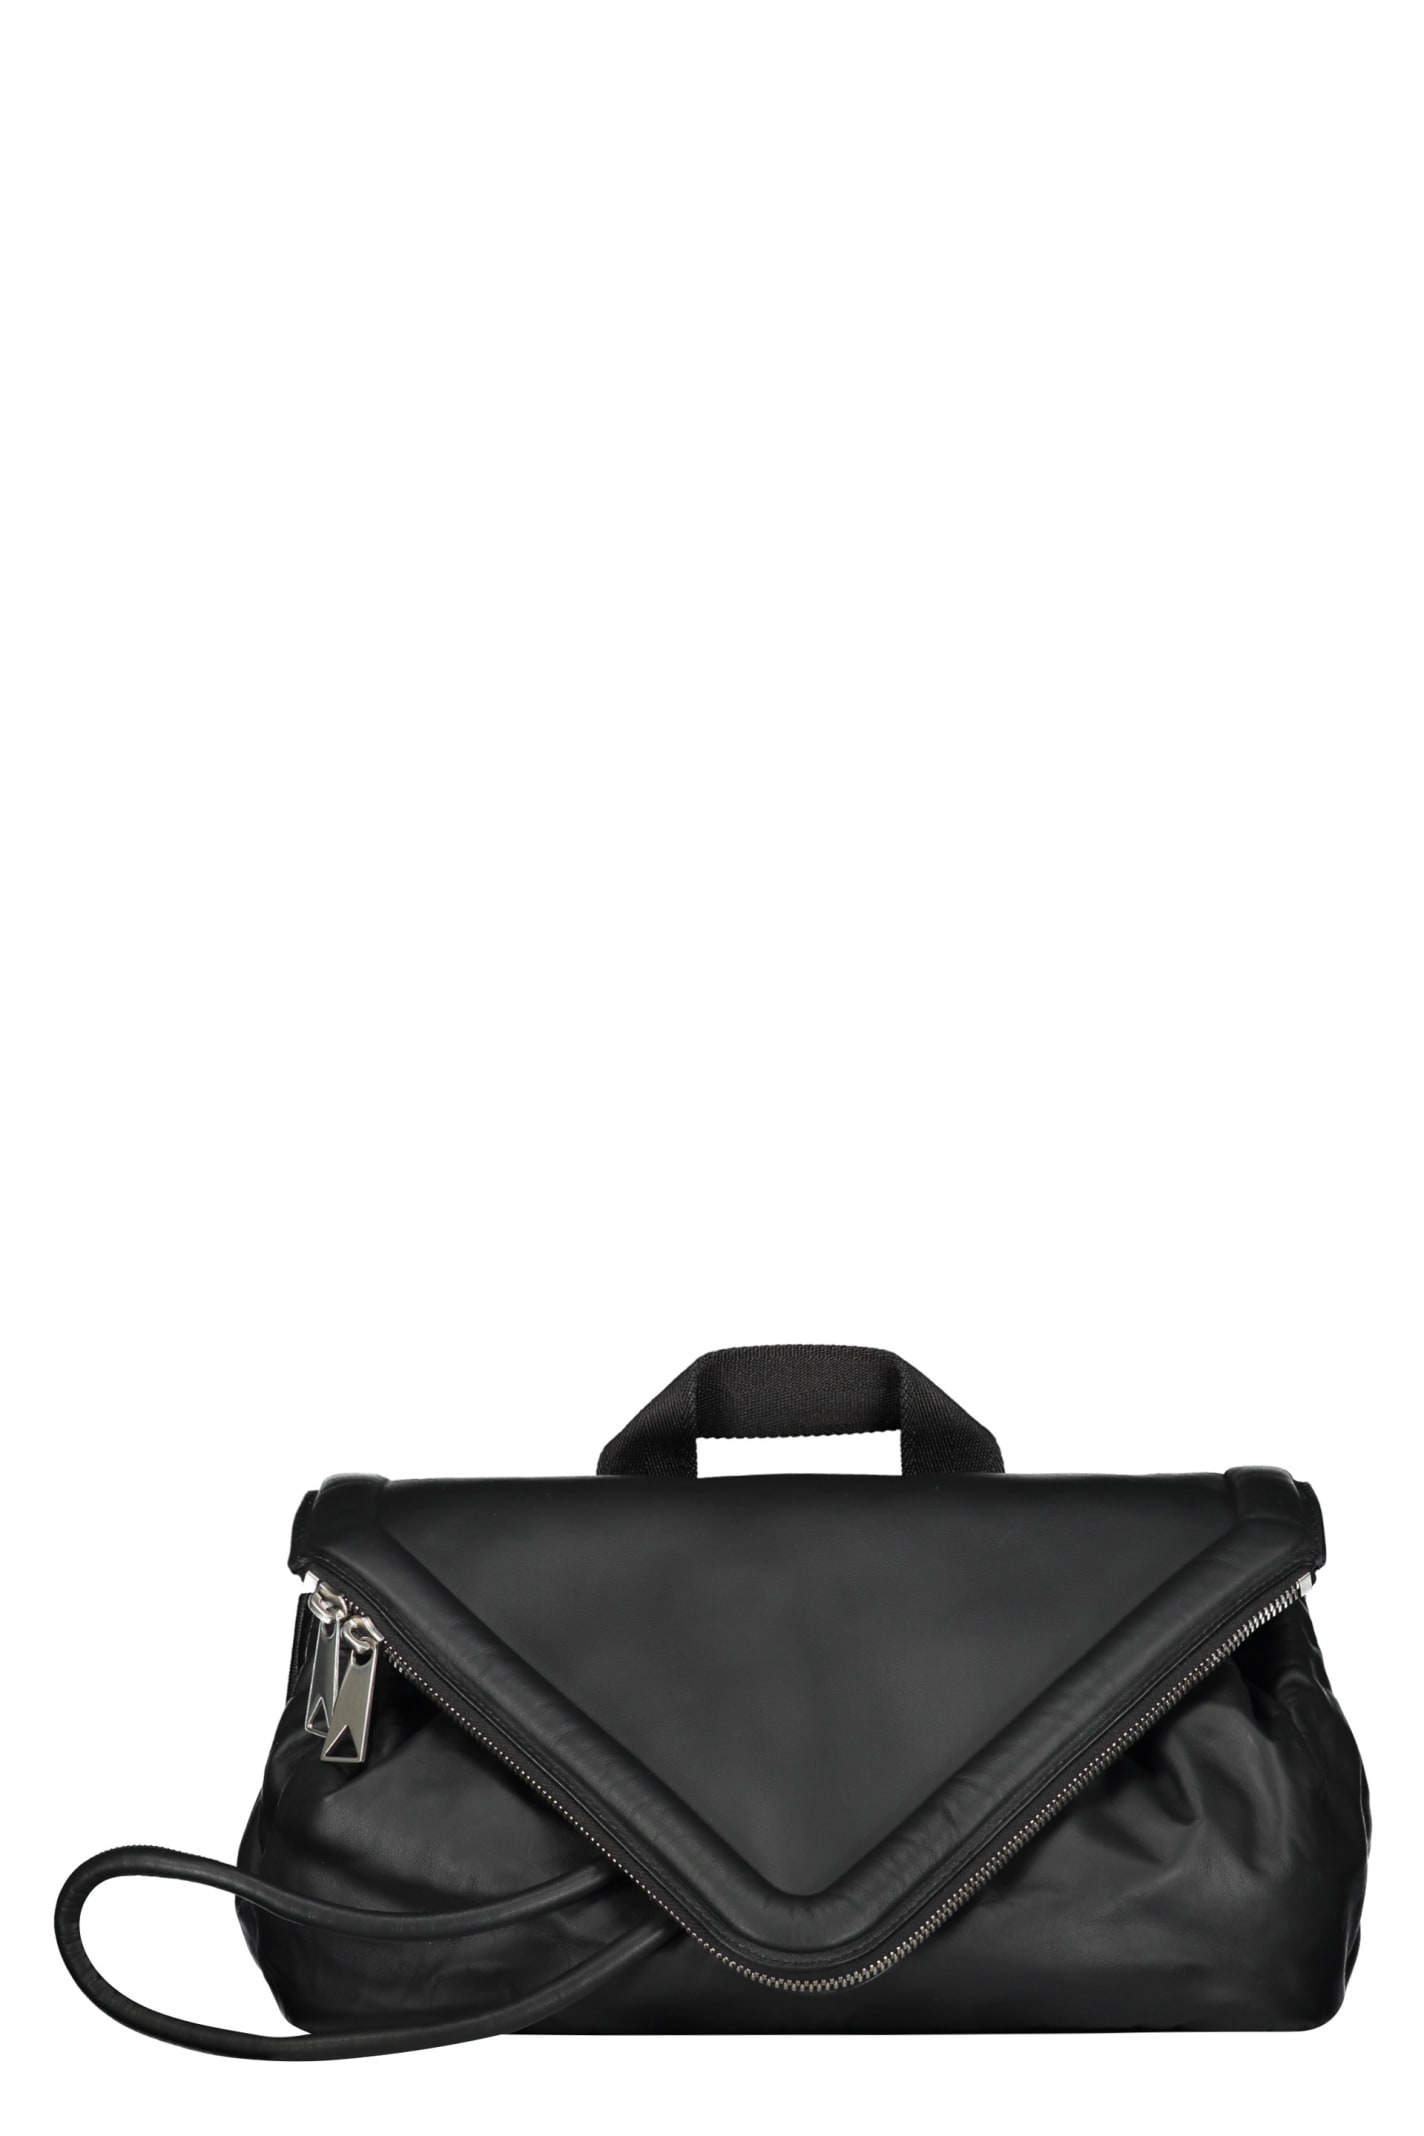 Bottega Veneta Leather Belt Bag In Black